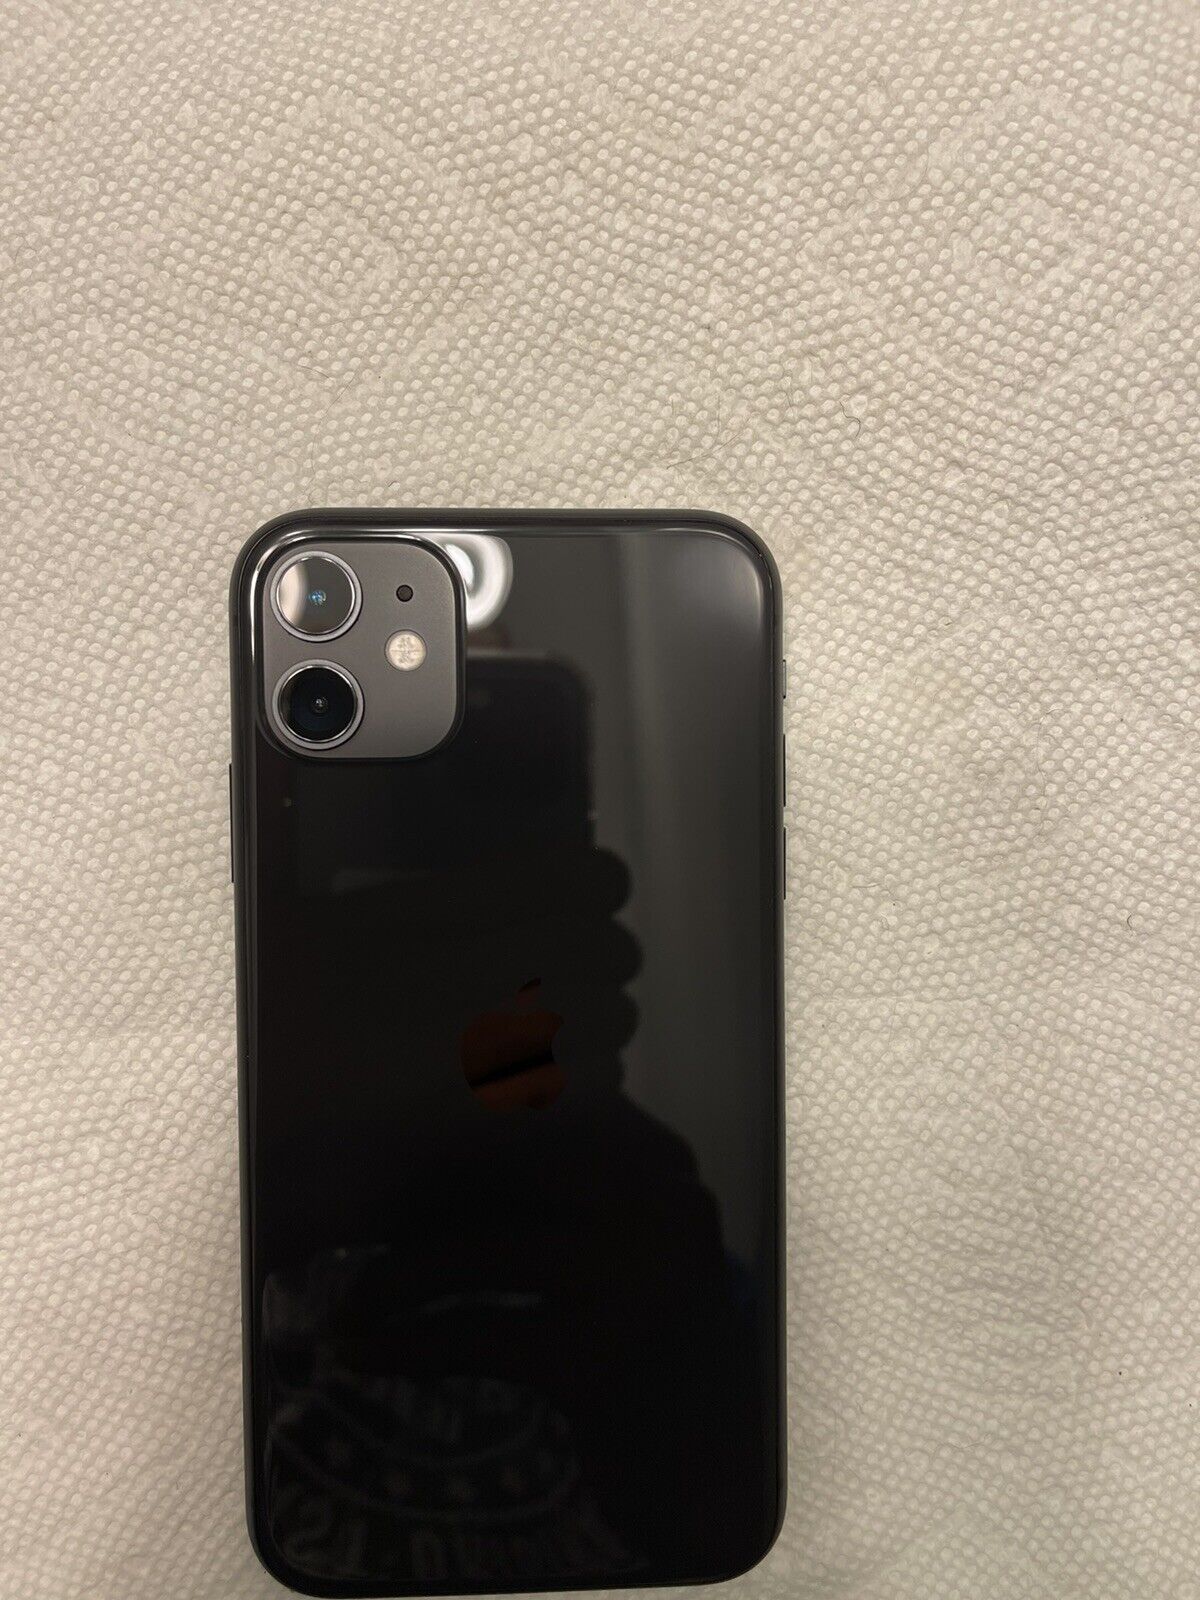 Apple iPhone 11 - 64GB - Black (Unlocked) A2111 (CDMA + GSM)